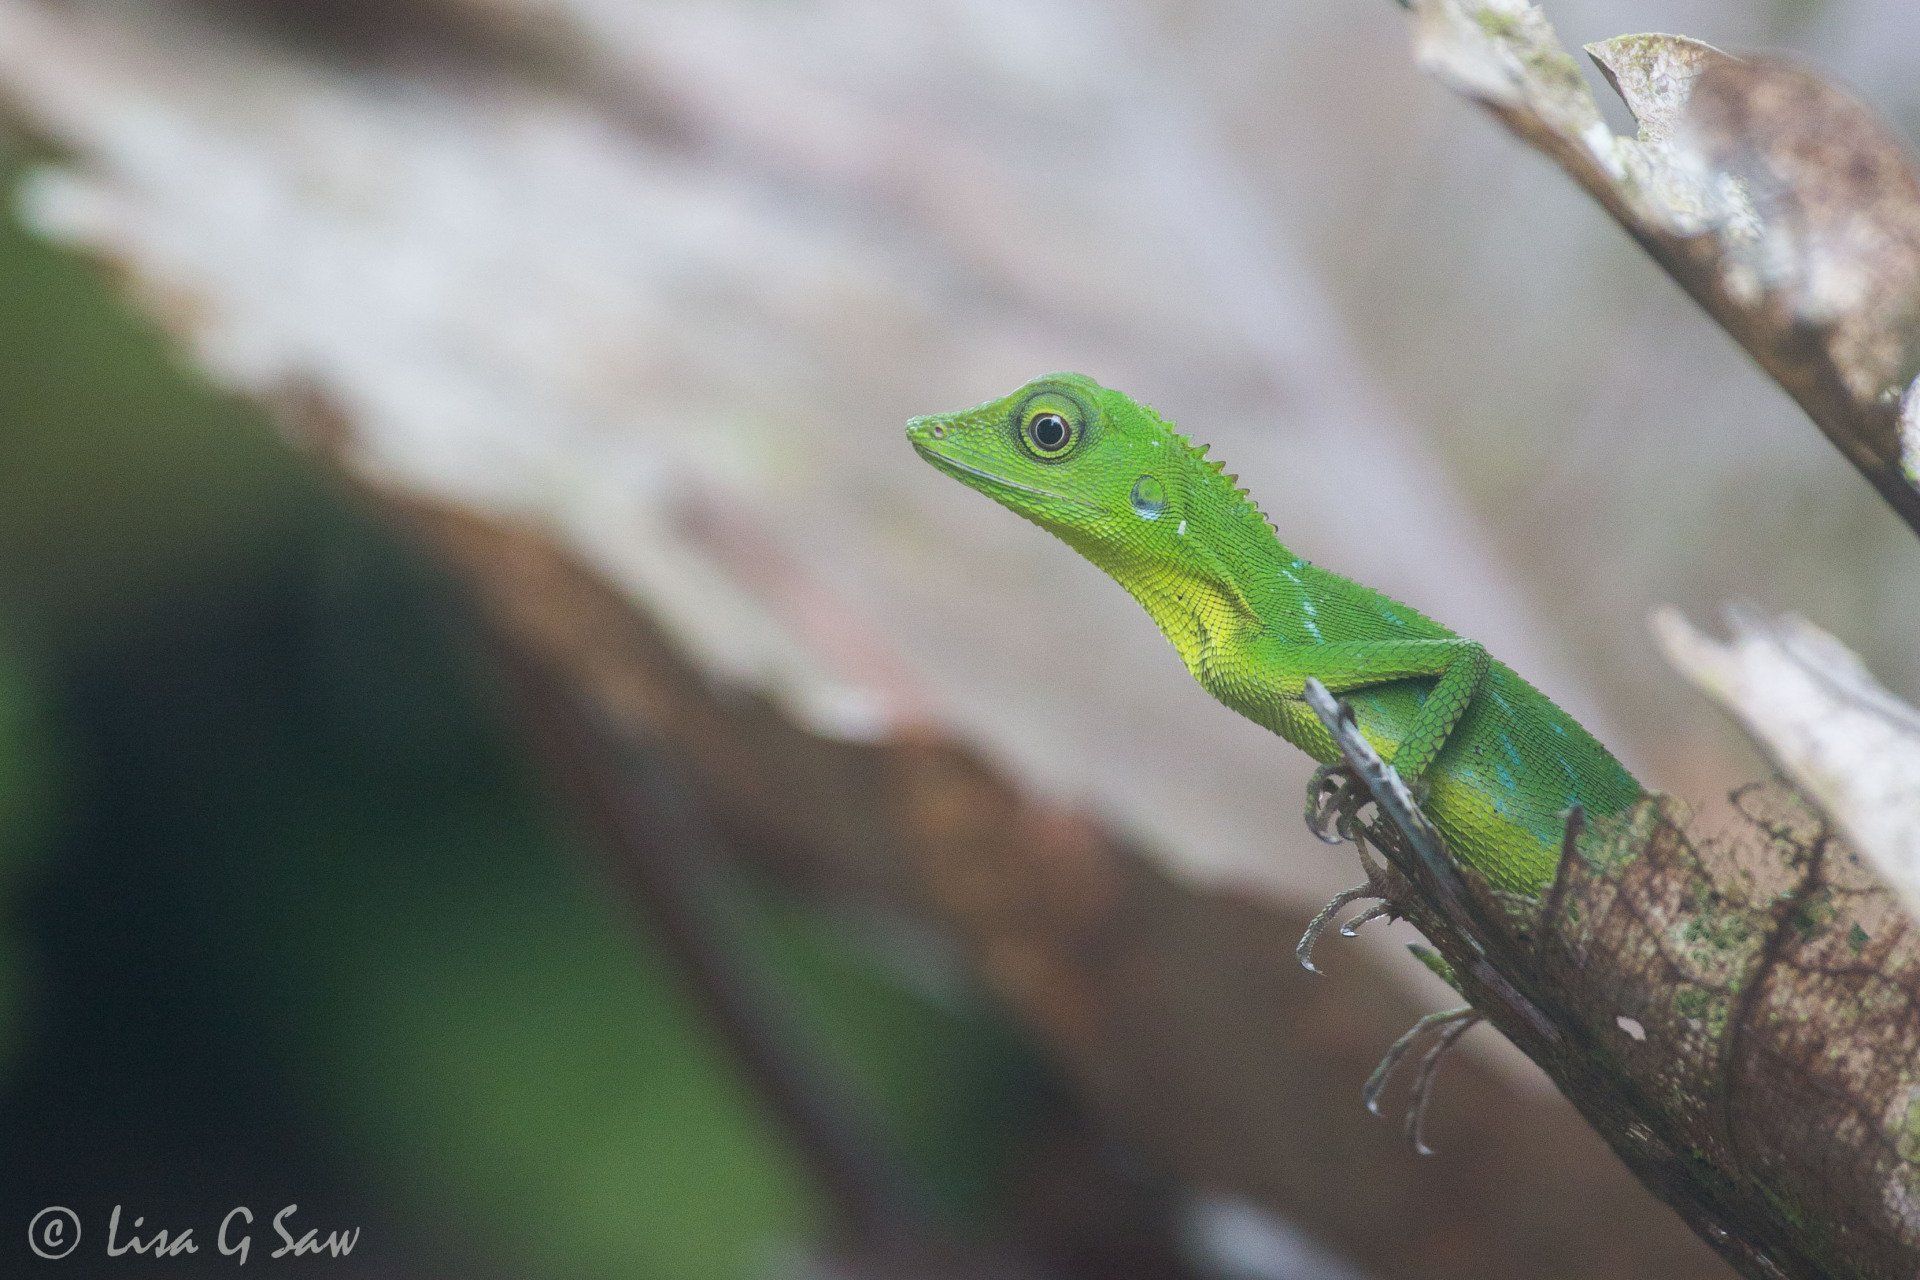 Green Crested Lizard on leaf at Gunung Mulu National Park